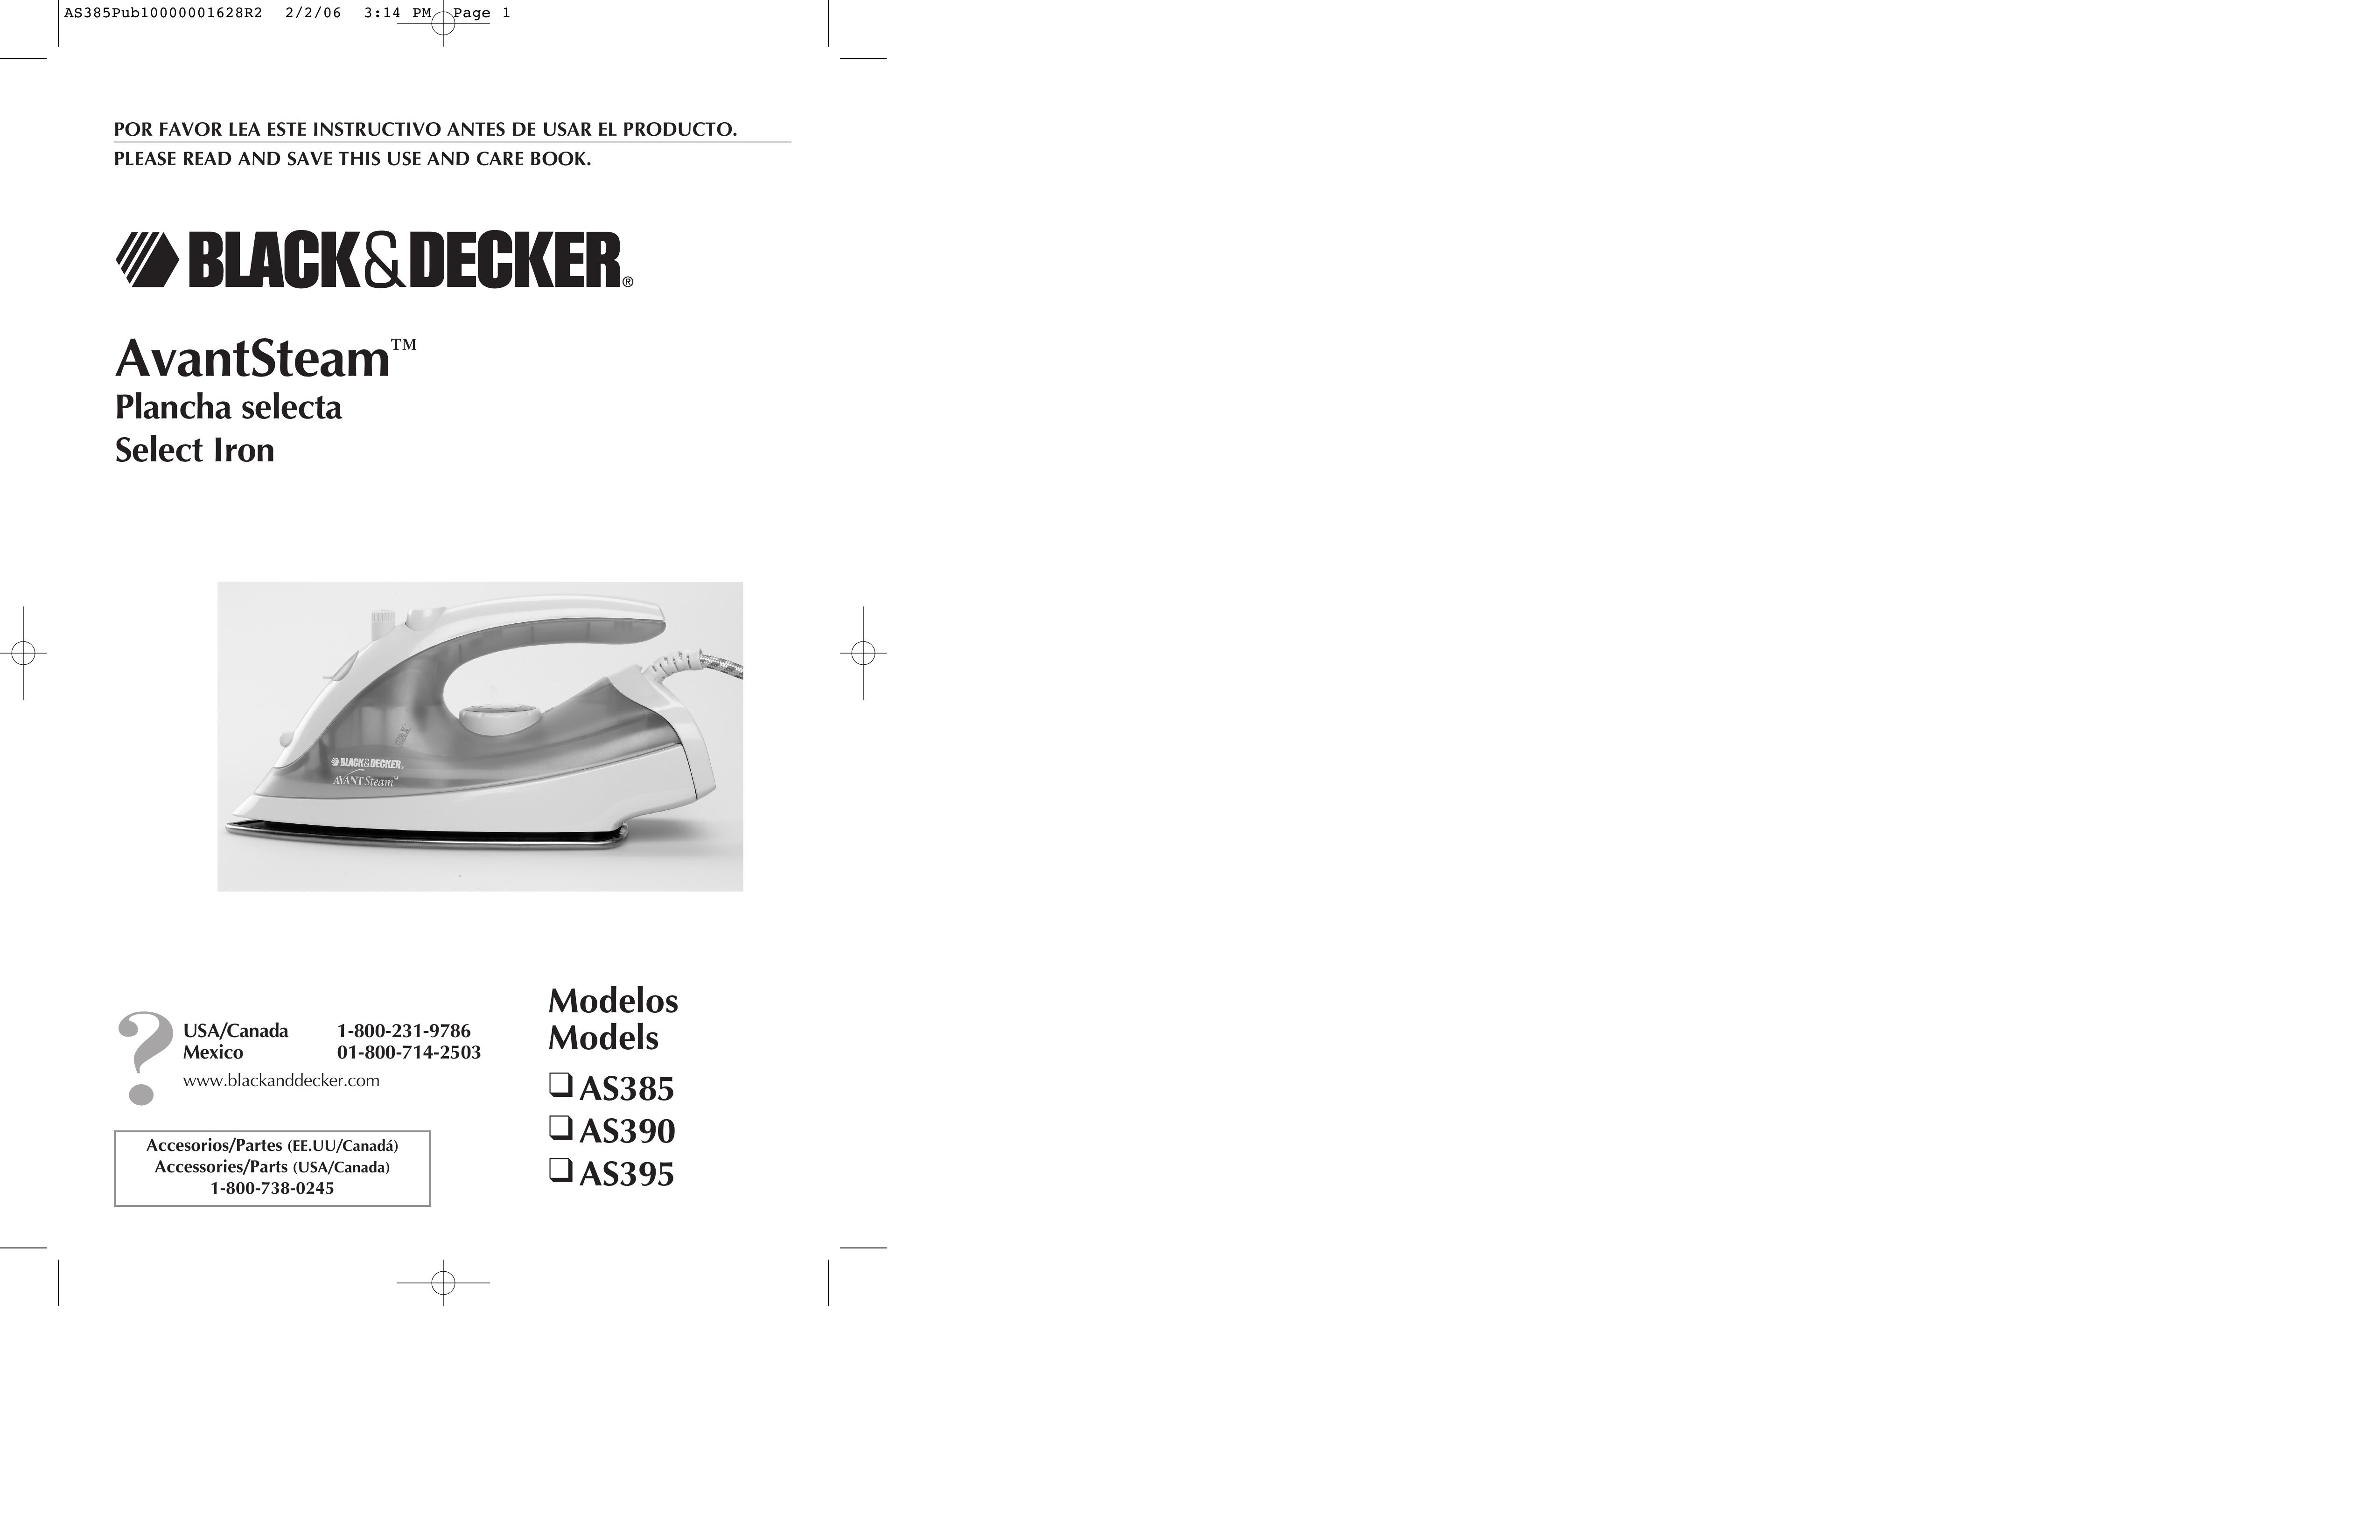 Black & Decker AS390 Iron User Manual